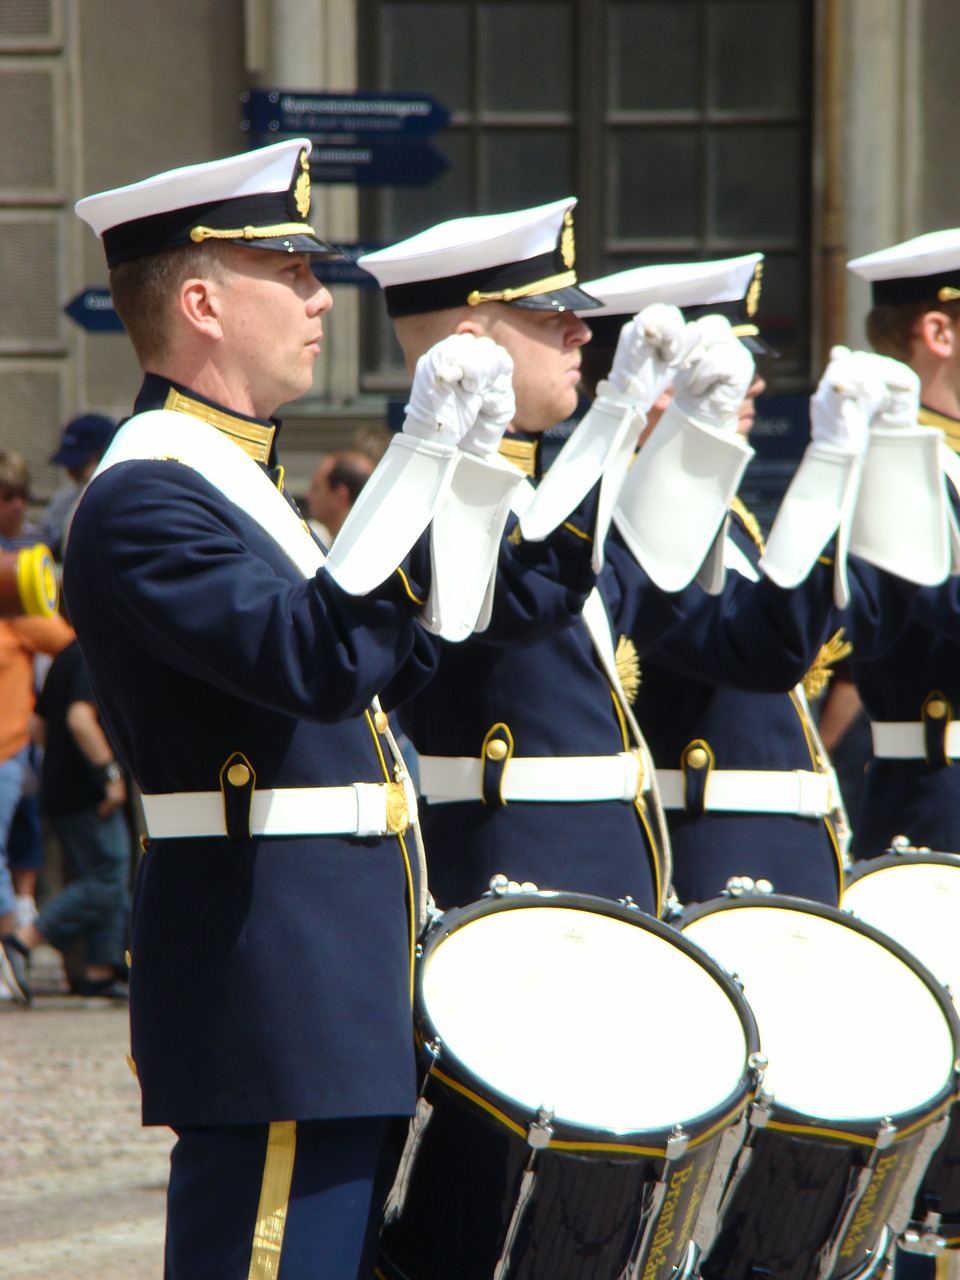 drum band uniform free photo